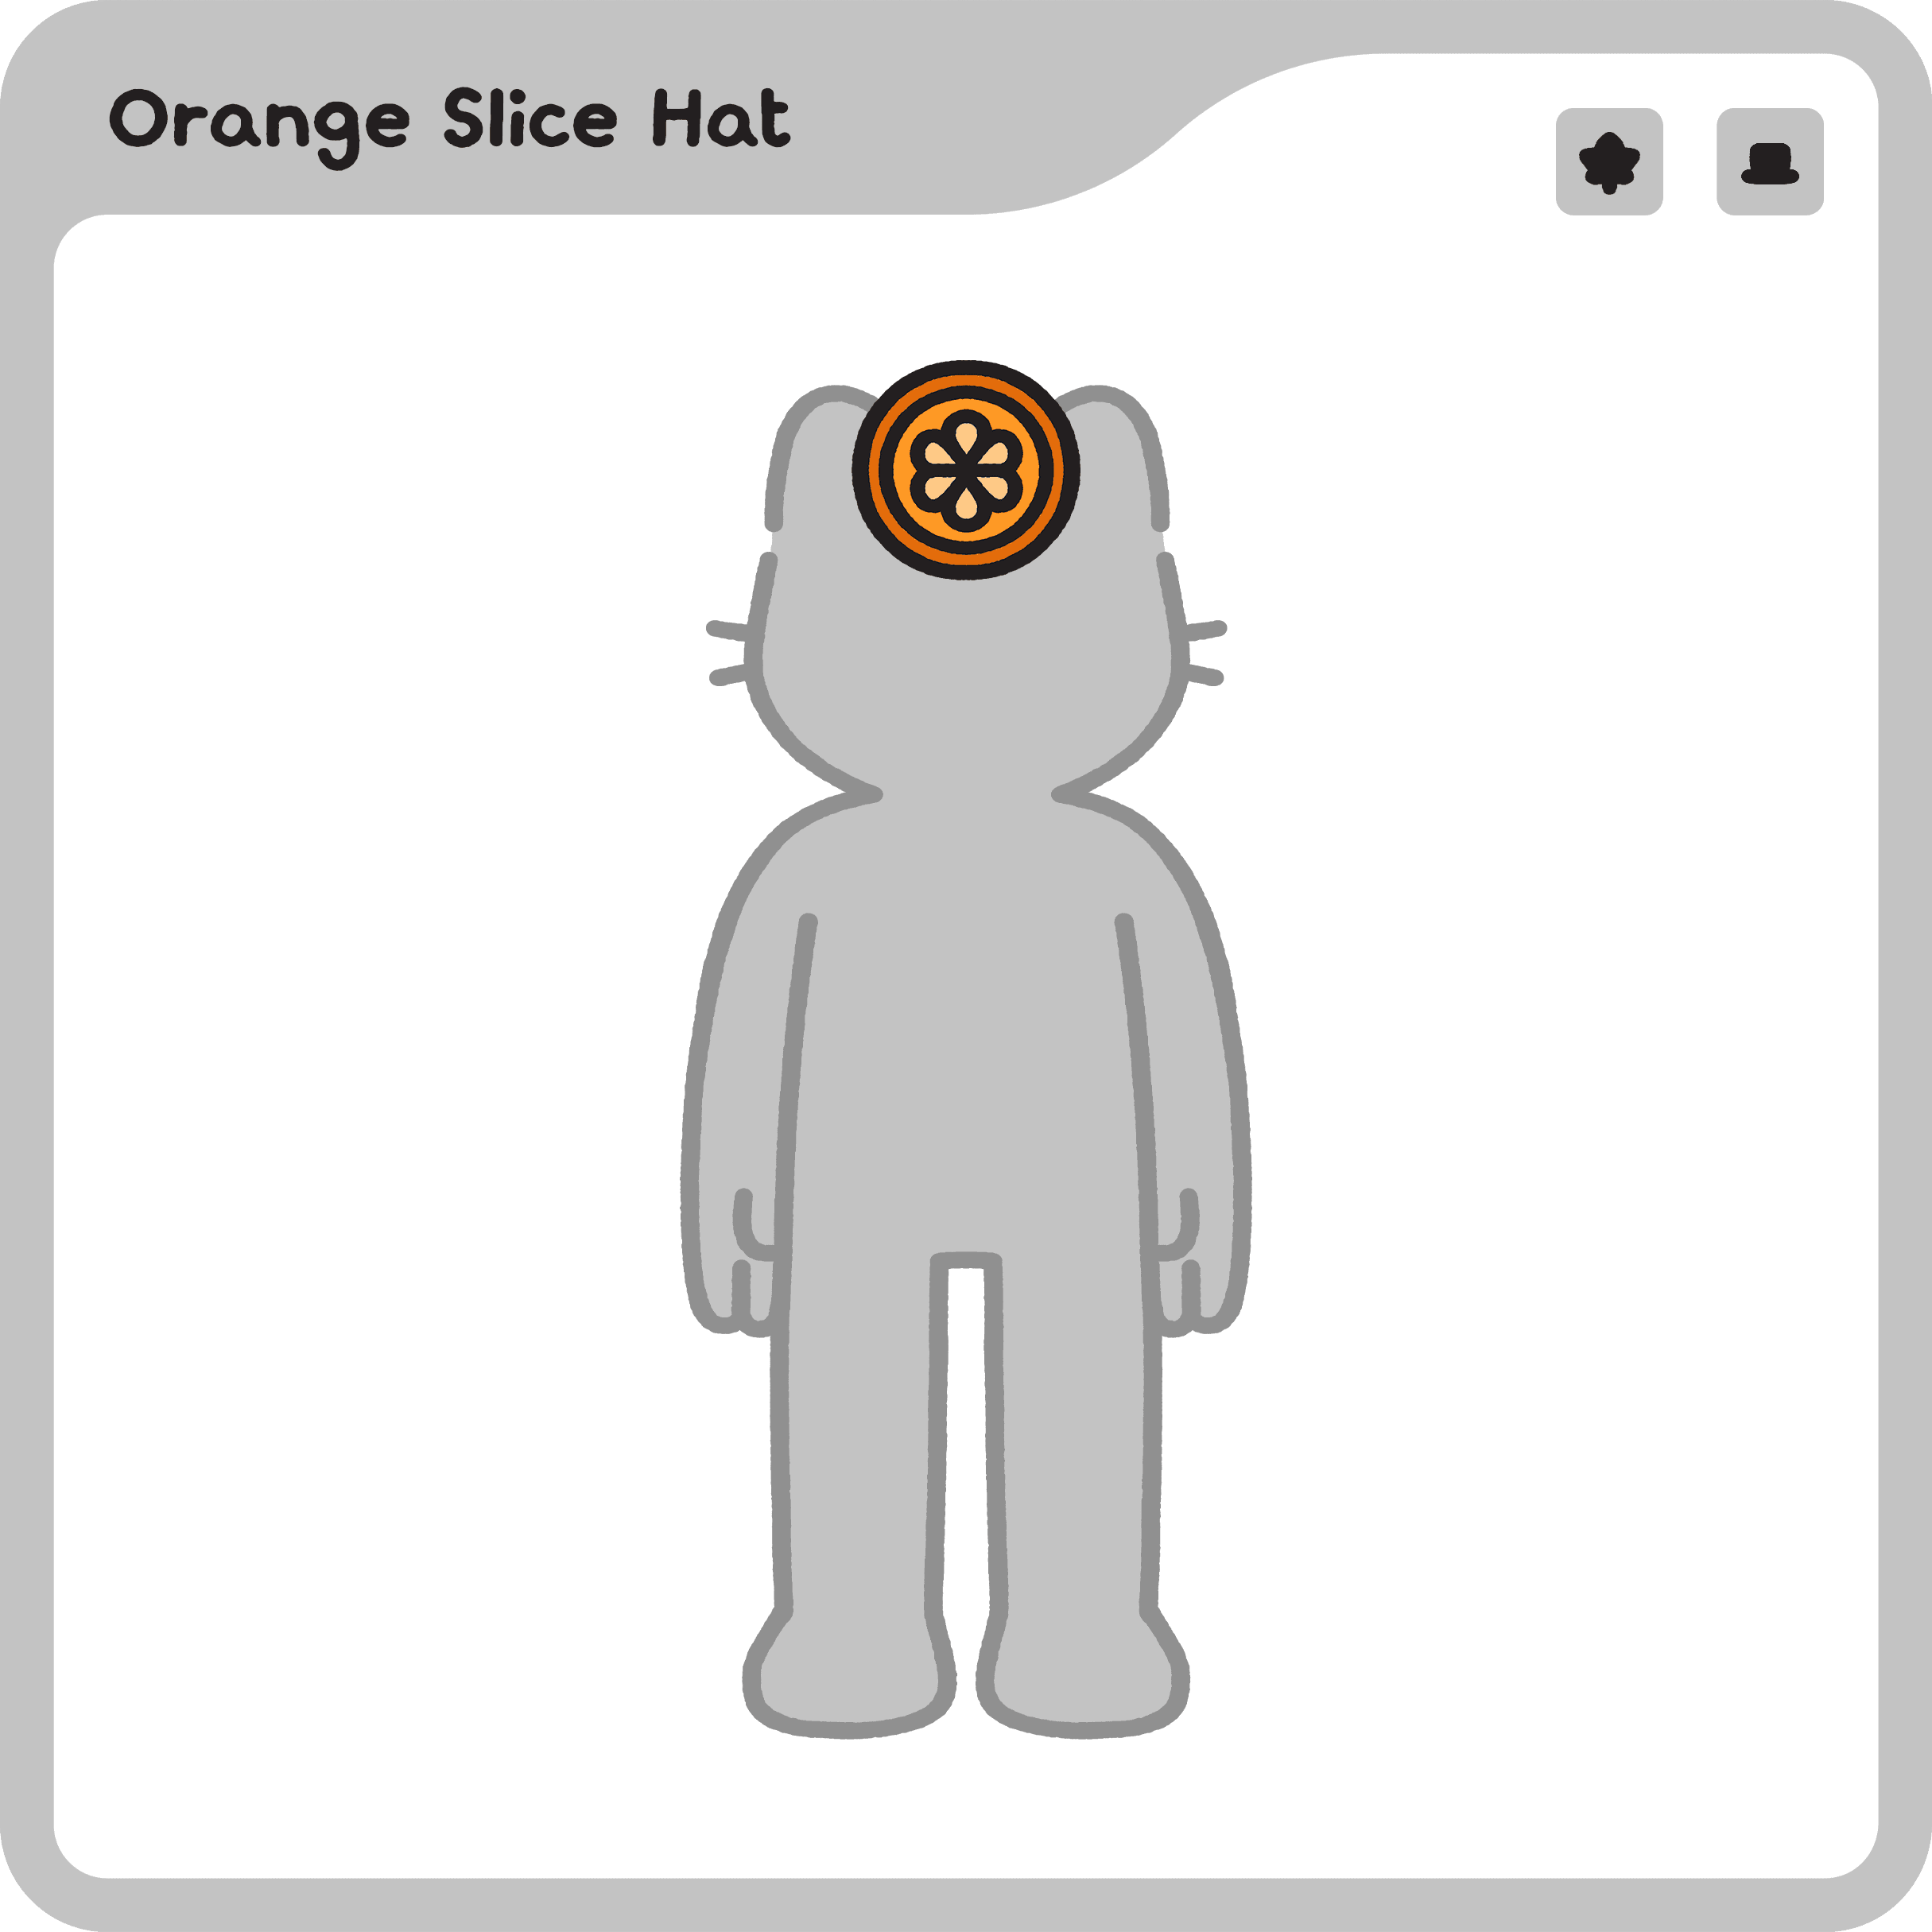 Orange Slice Hat